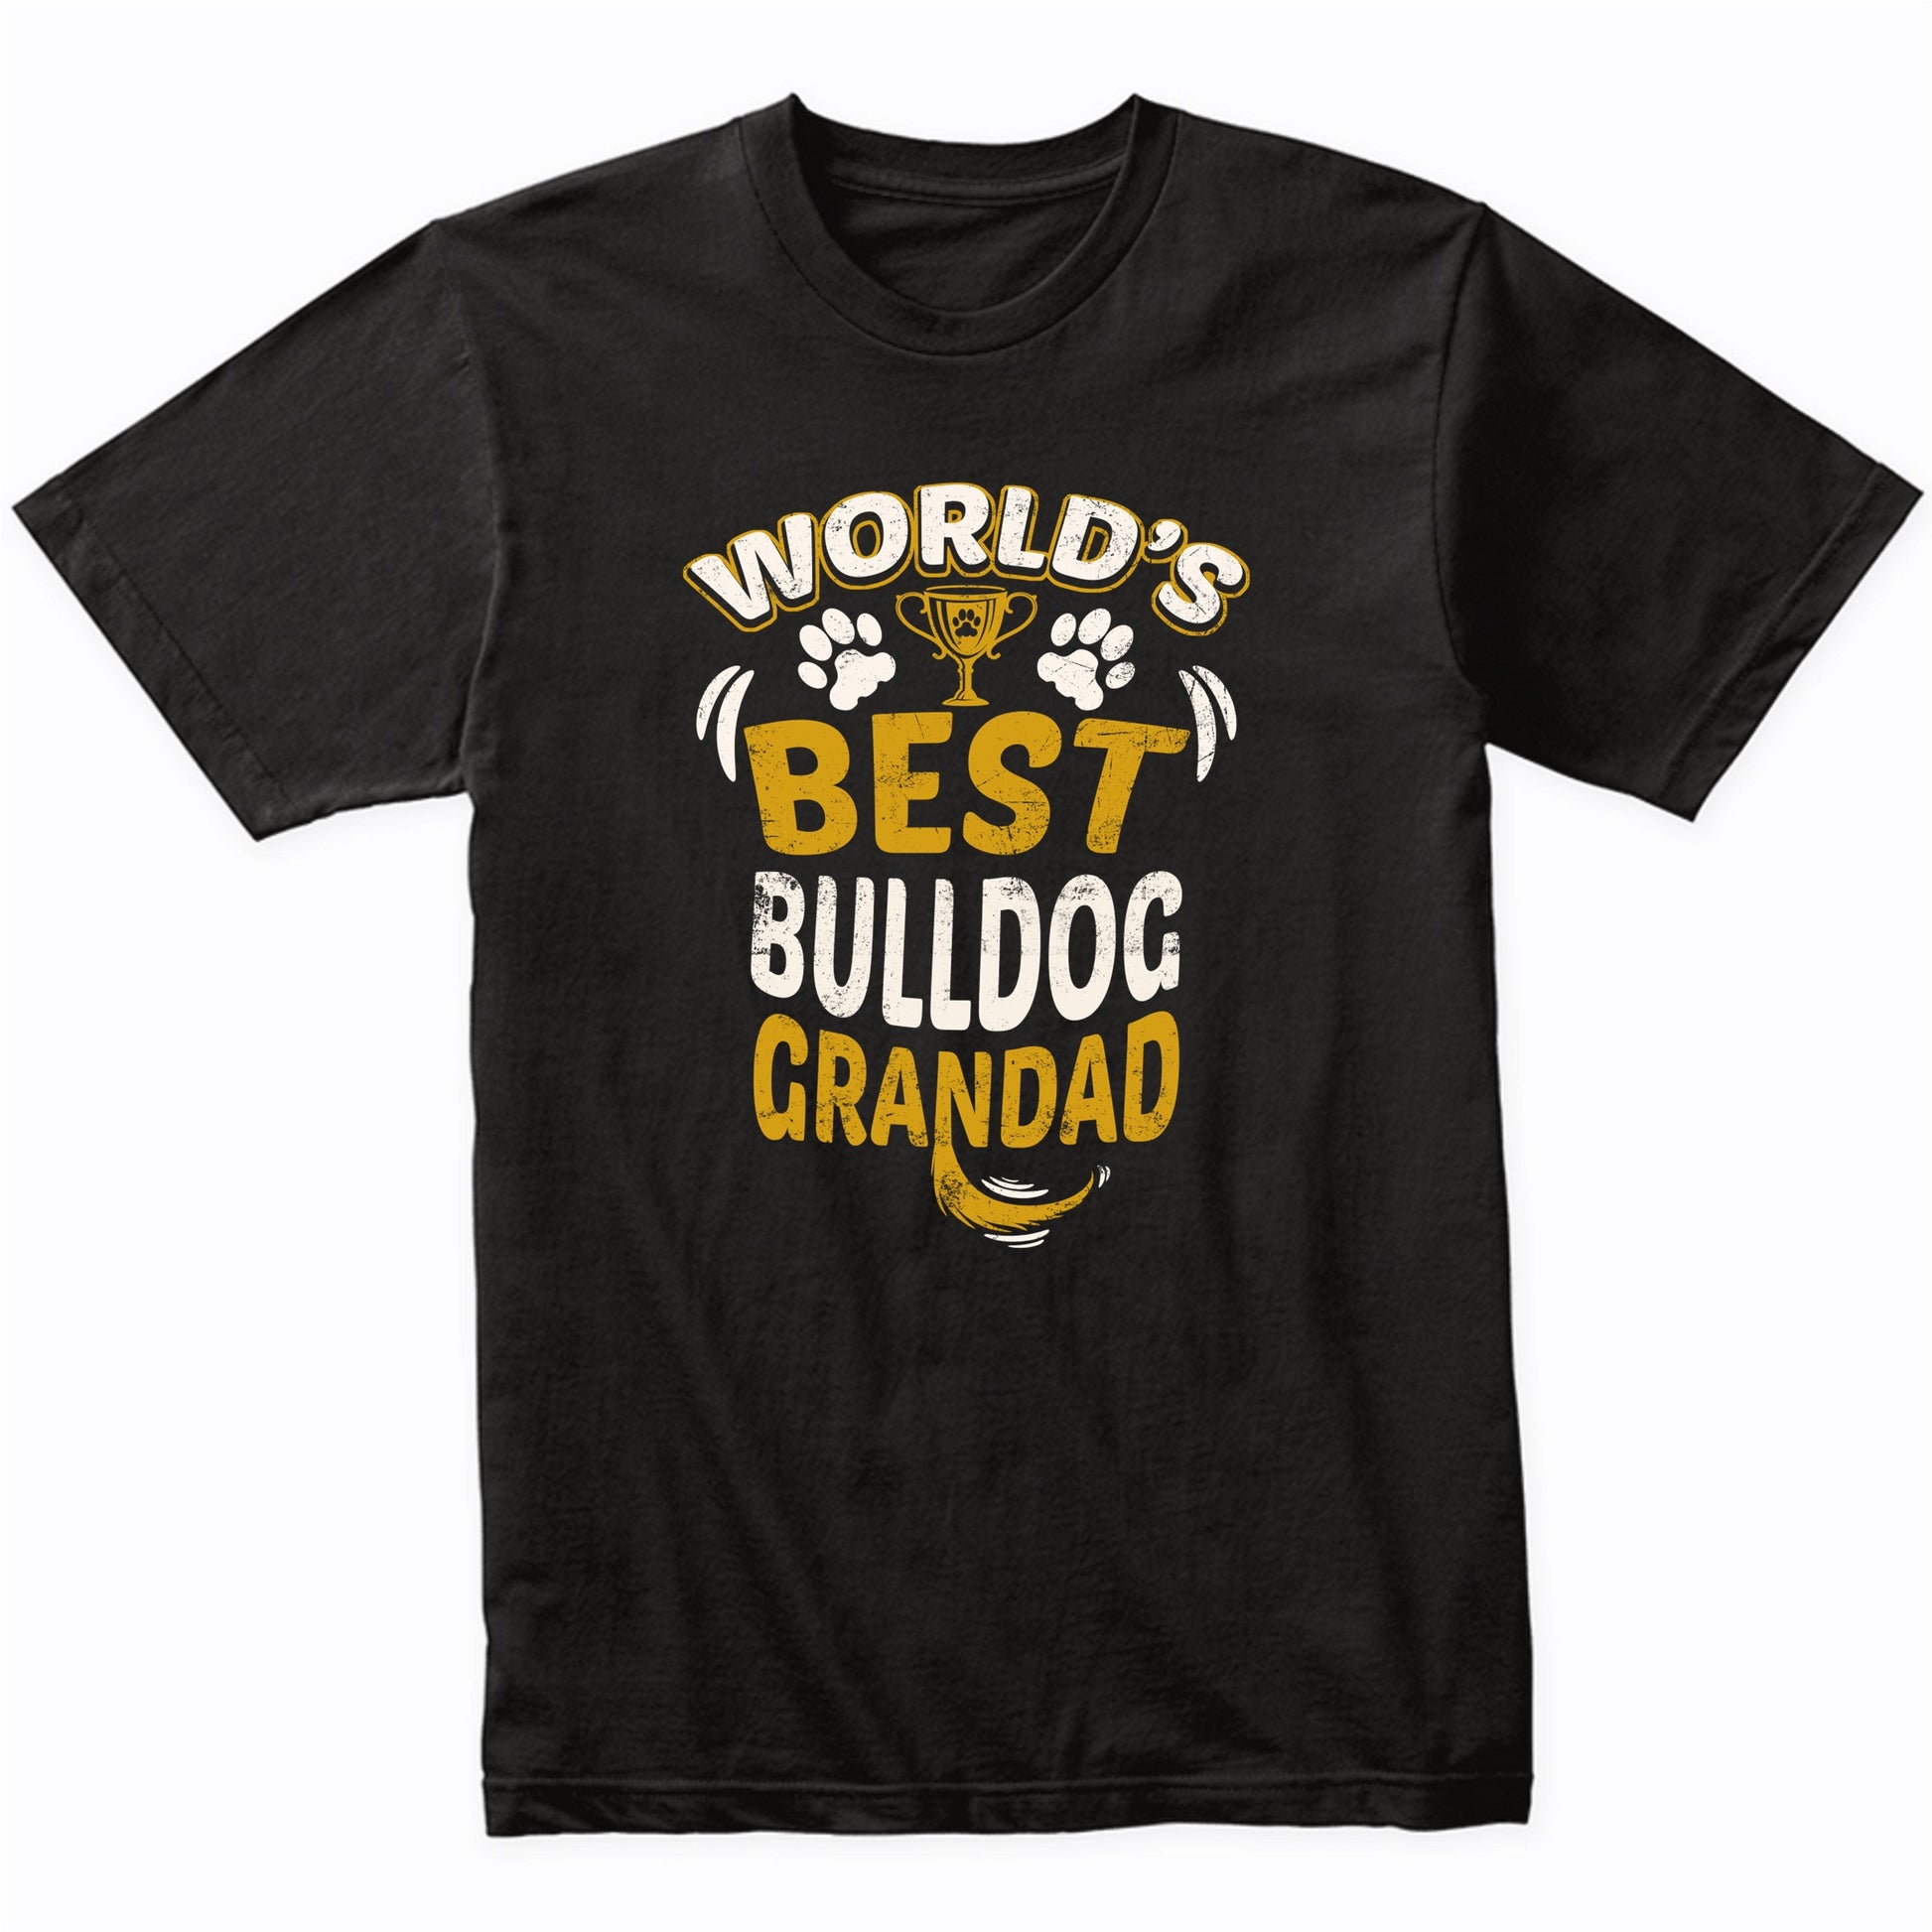 World's Best Bulldog Grandad Graphic T-Shirt